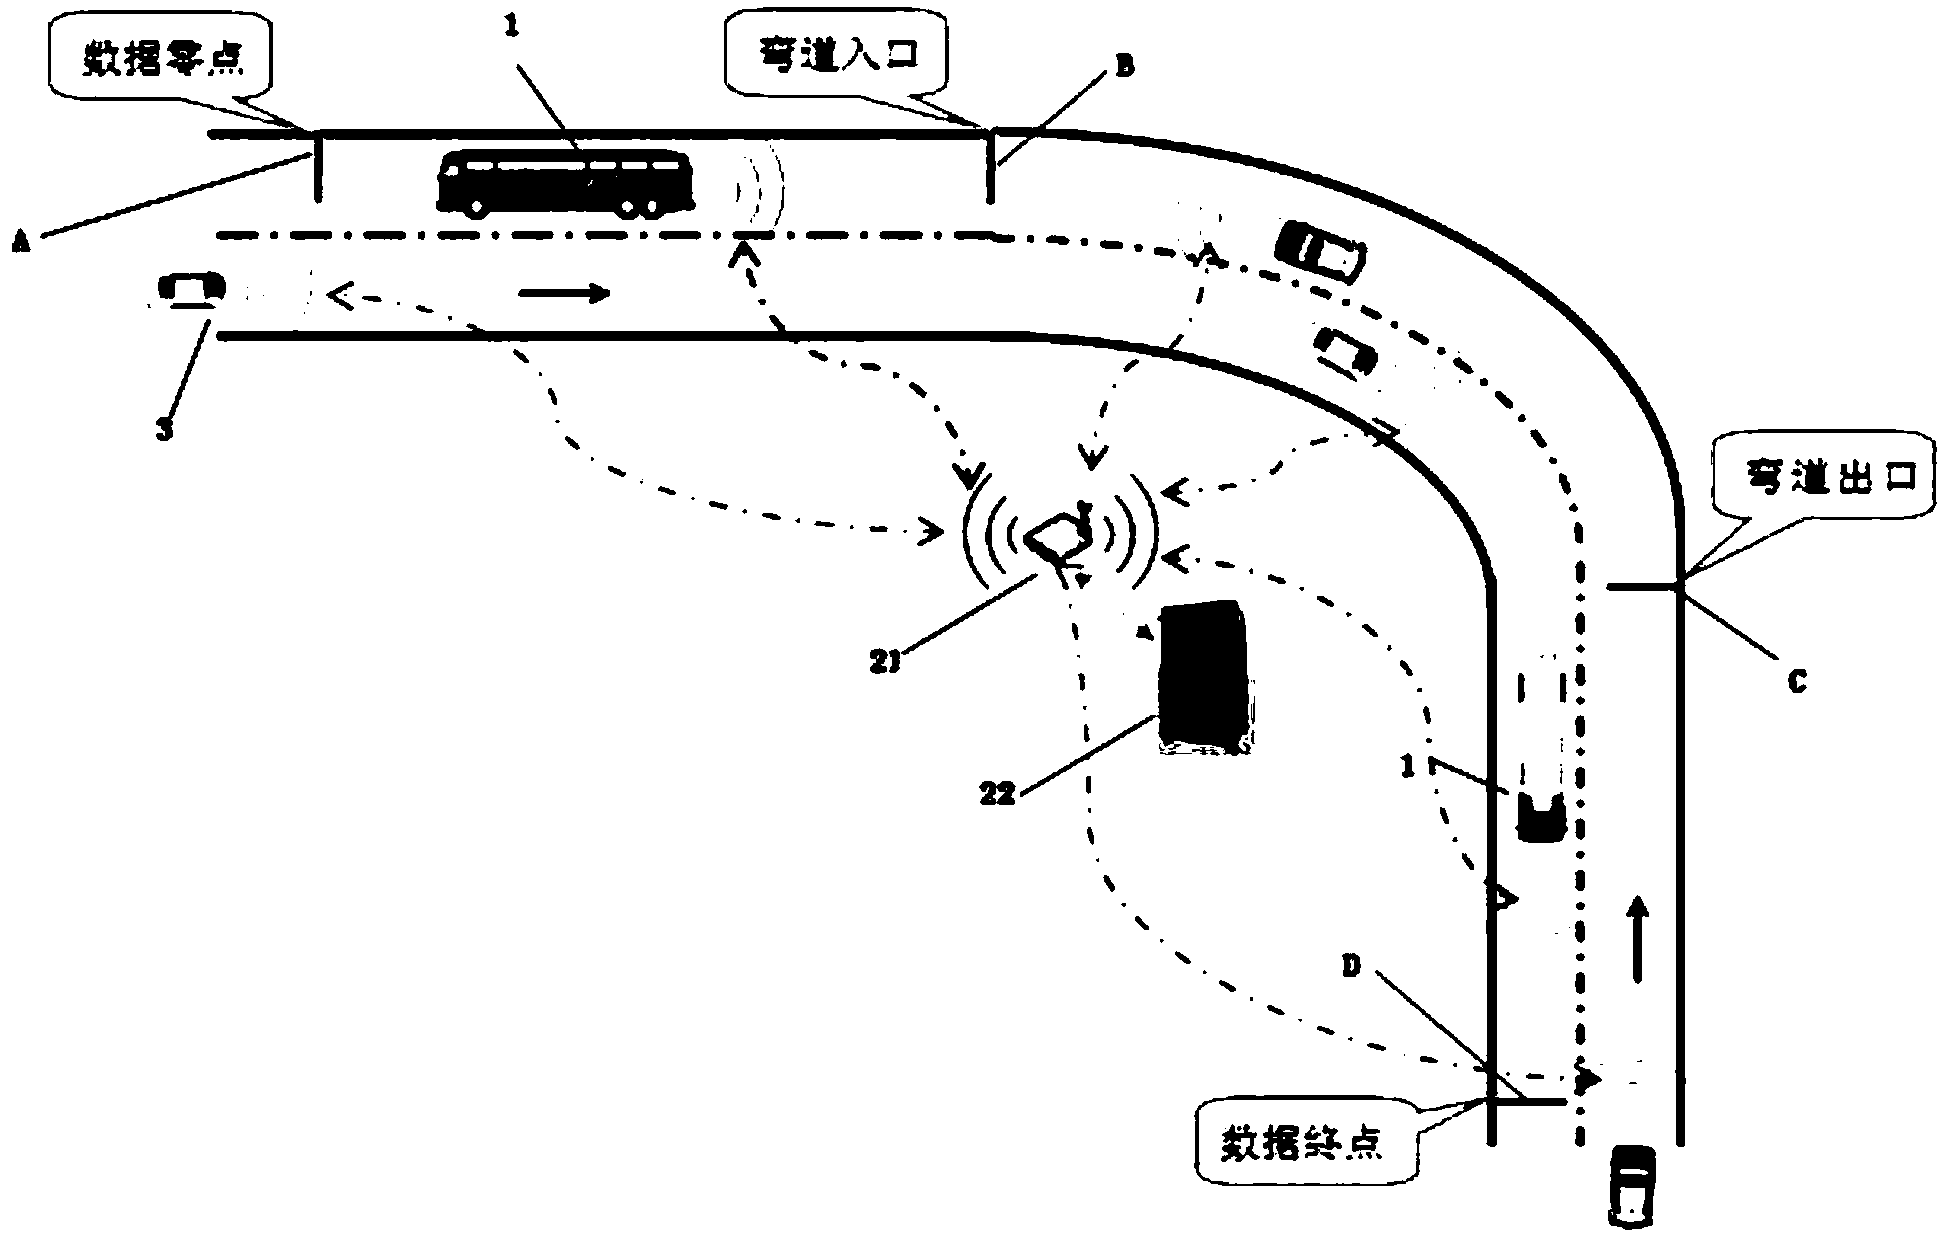 Vehicle curve passing through auxiliary system based on vehicle-road/vehicle-vehicle communication